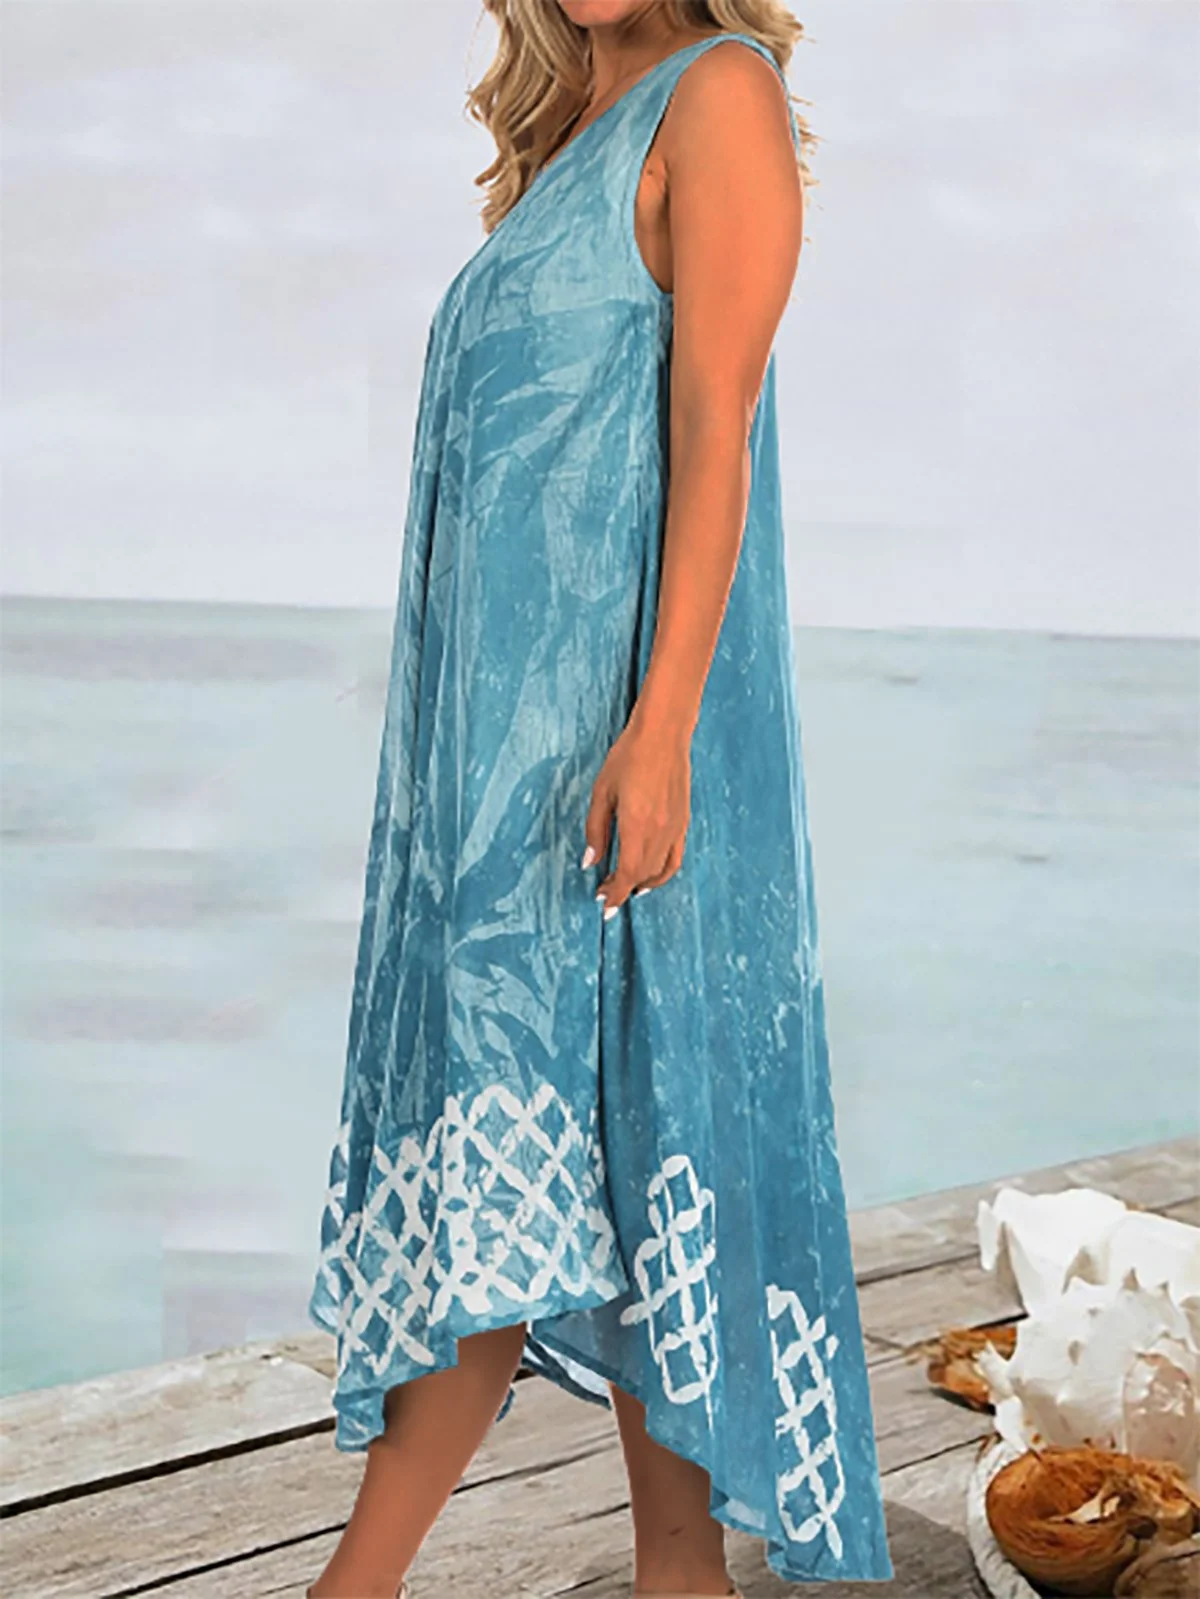 Women's Casual Summer Sleeveless Loose Caftan Maxi Tent Knitting Dress